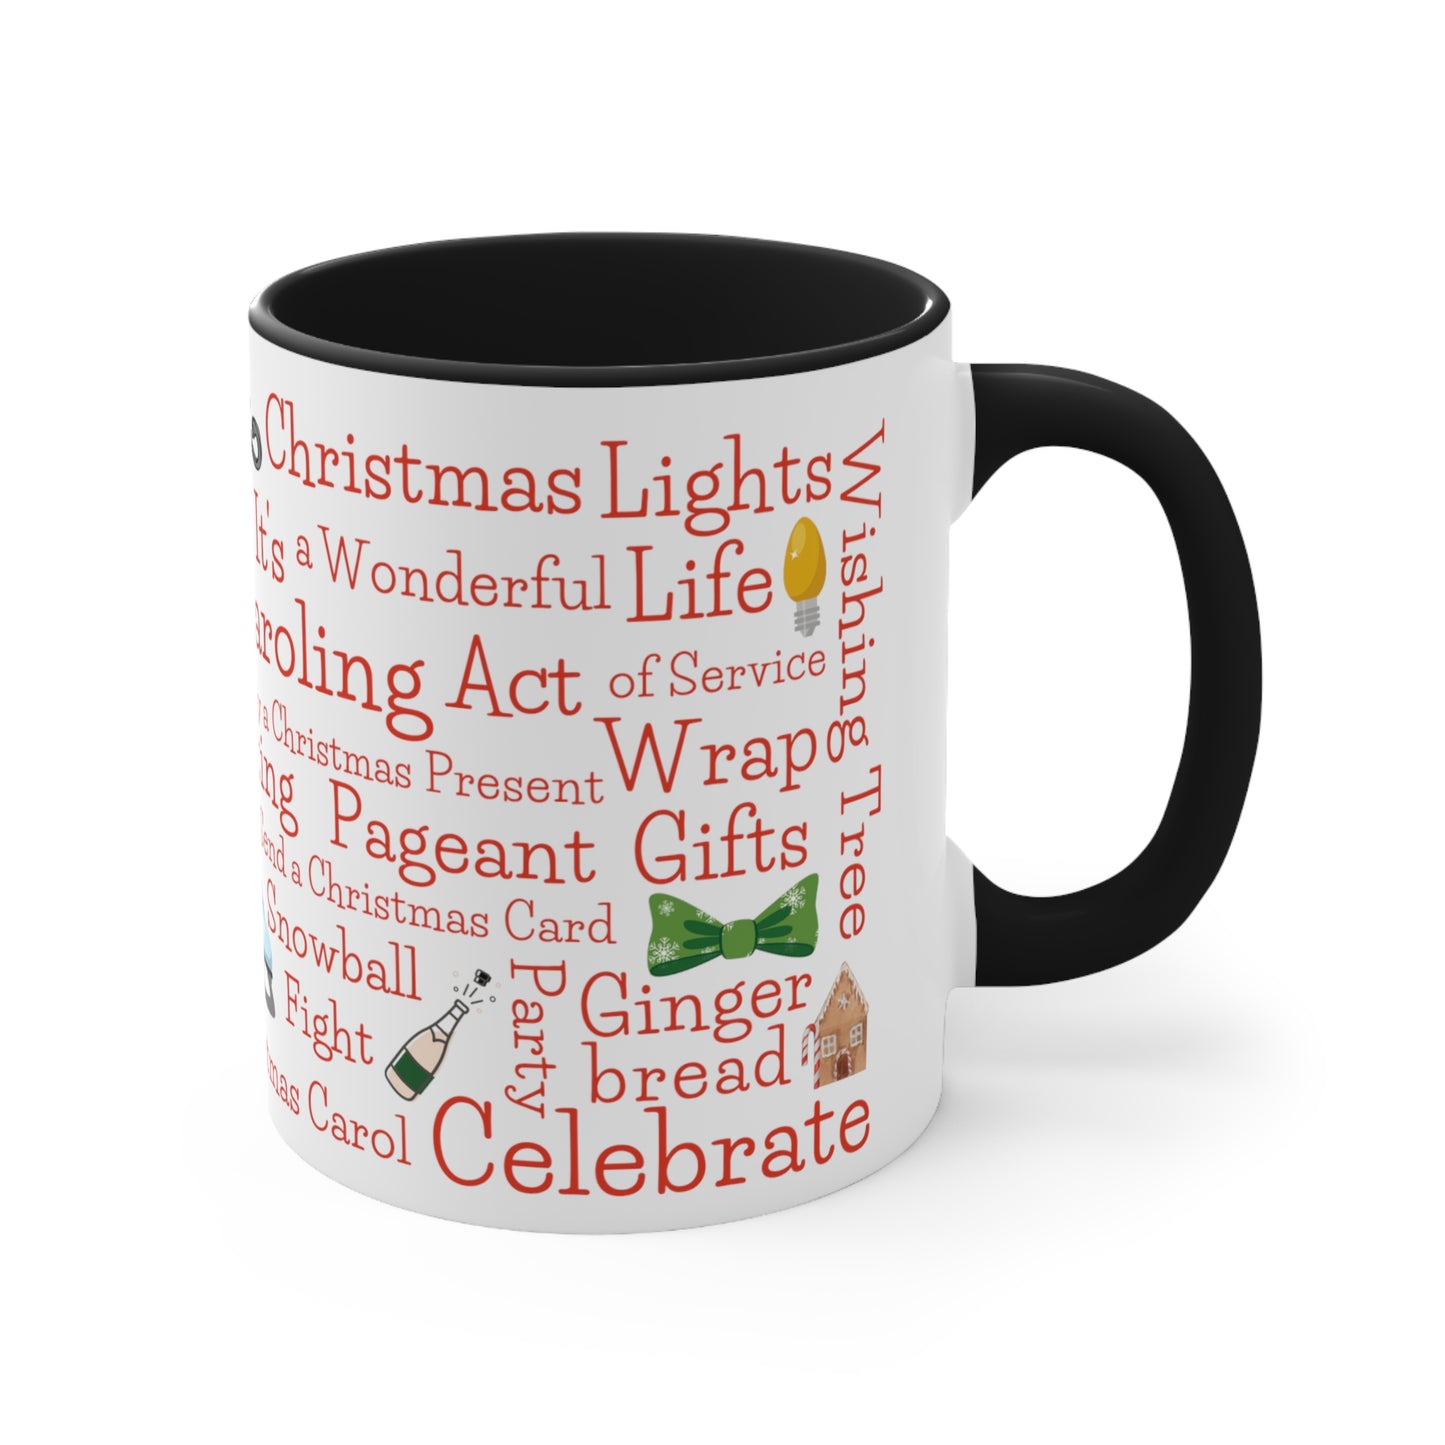 The Christmas Calendar Coffee Mug, 11oz - FREE U.S. SHIPPING